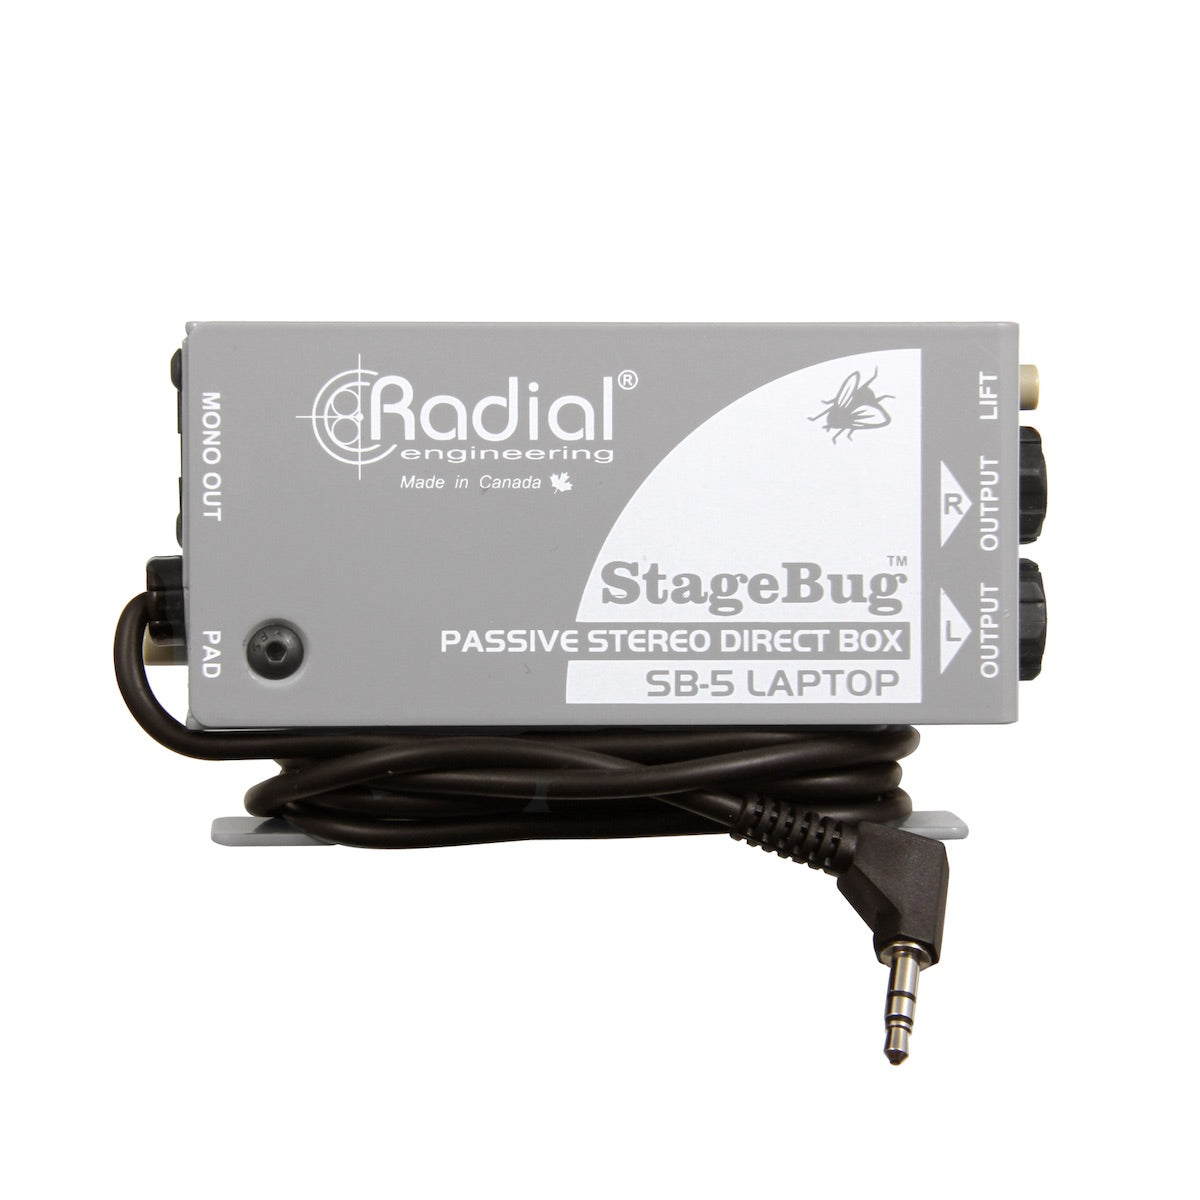 Radial StageBug SB-5 Laptop - Compact Stereo Direct Box for Computers, top